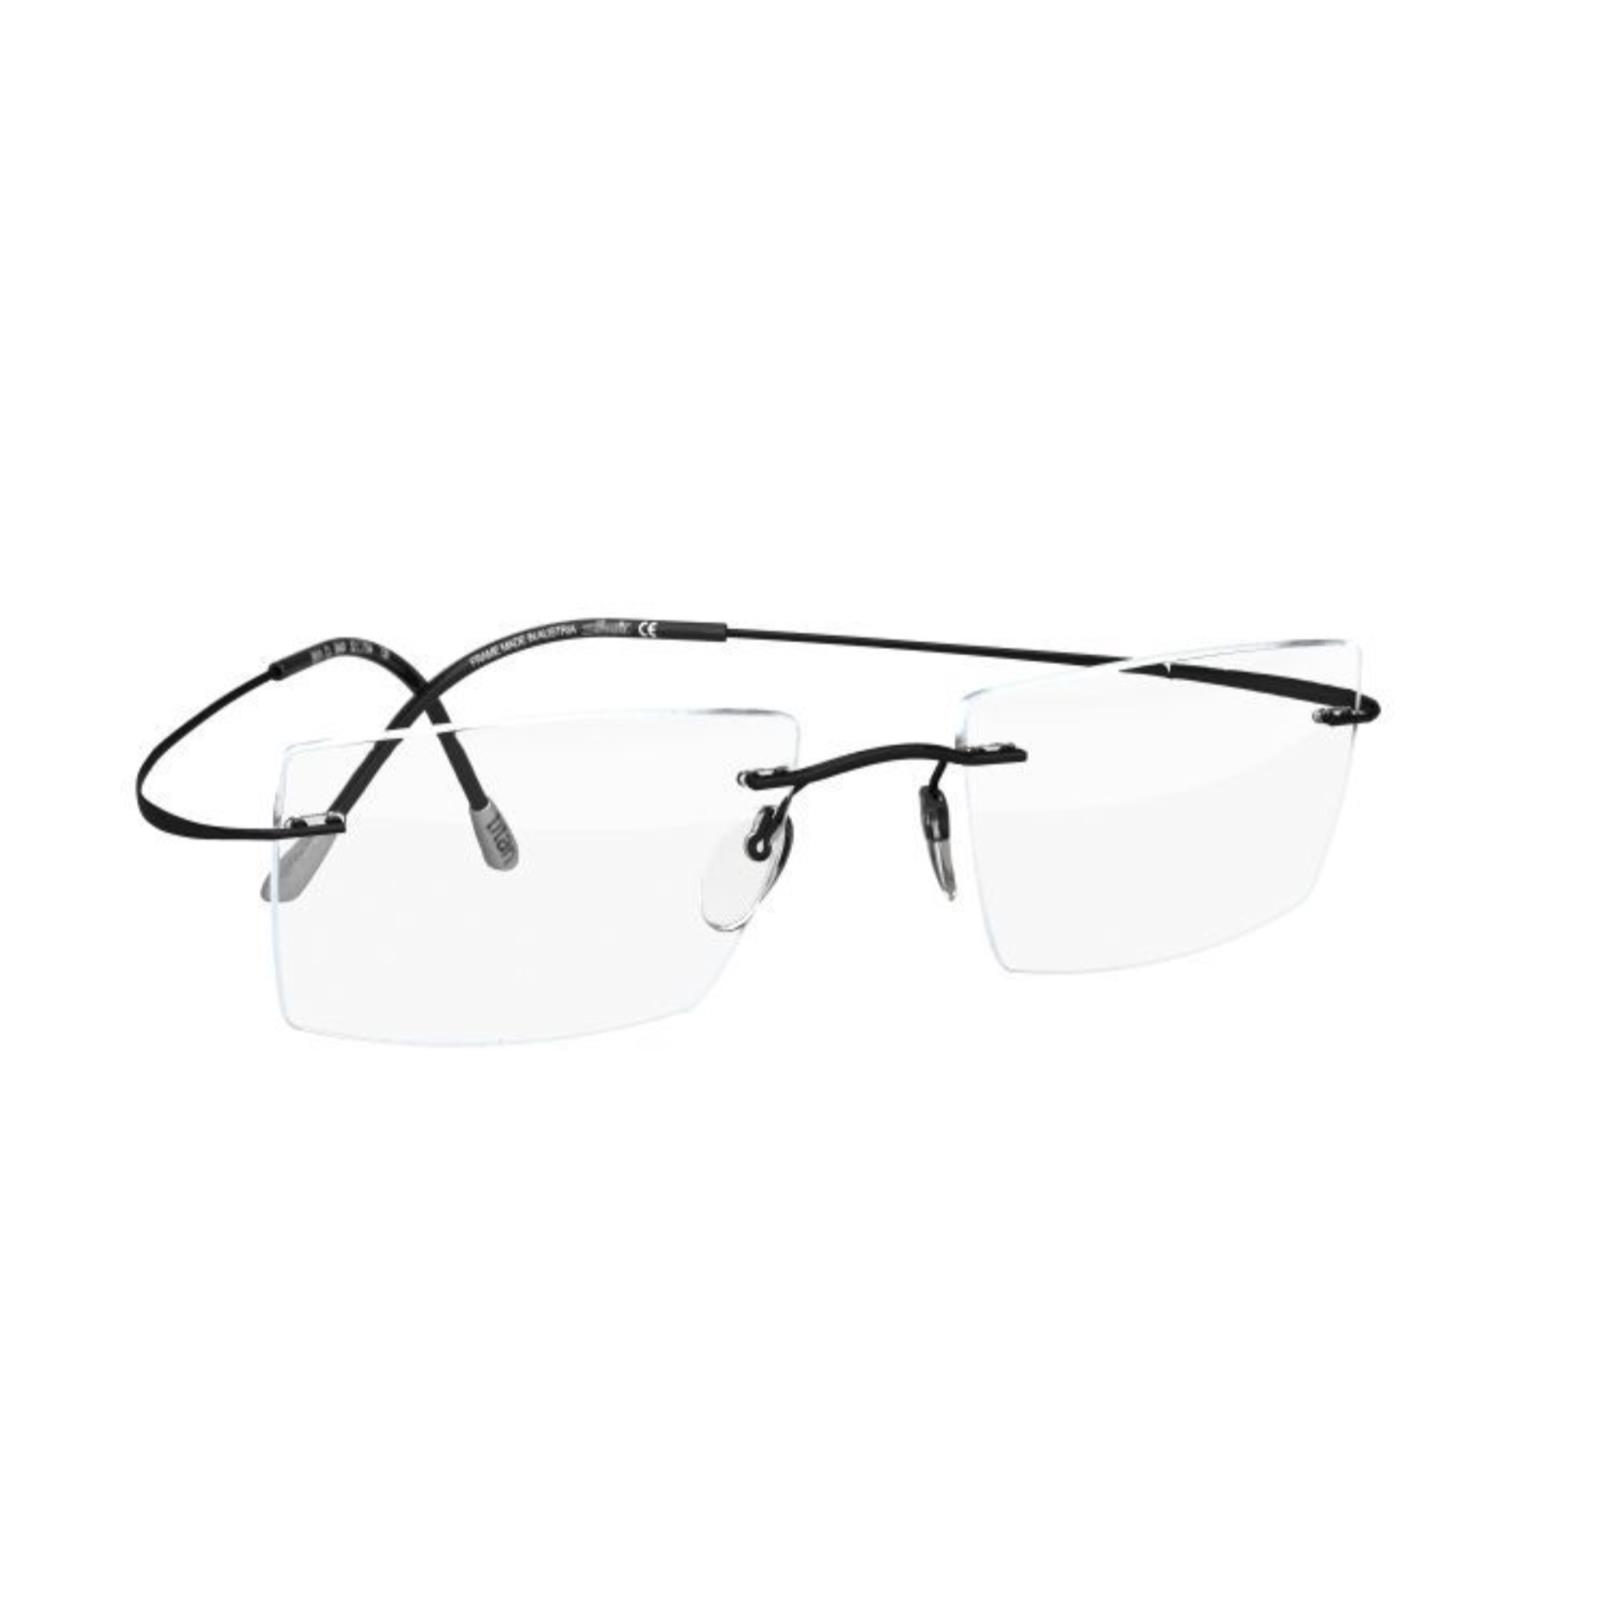 Silhouette Rimless Eyeglasses Titan Minimal Art The Must Collection Frames